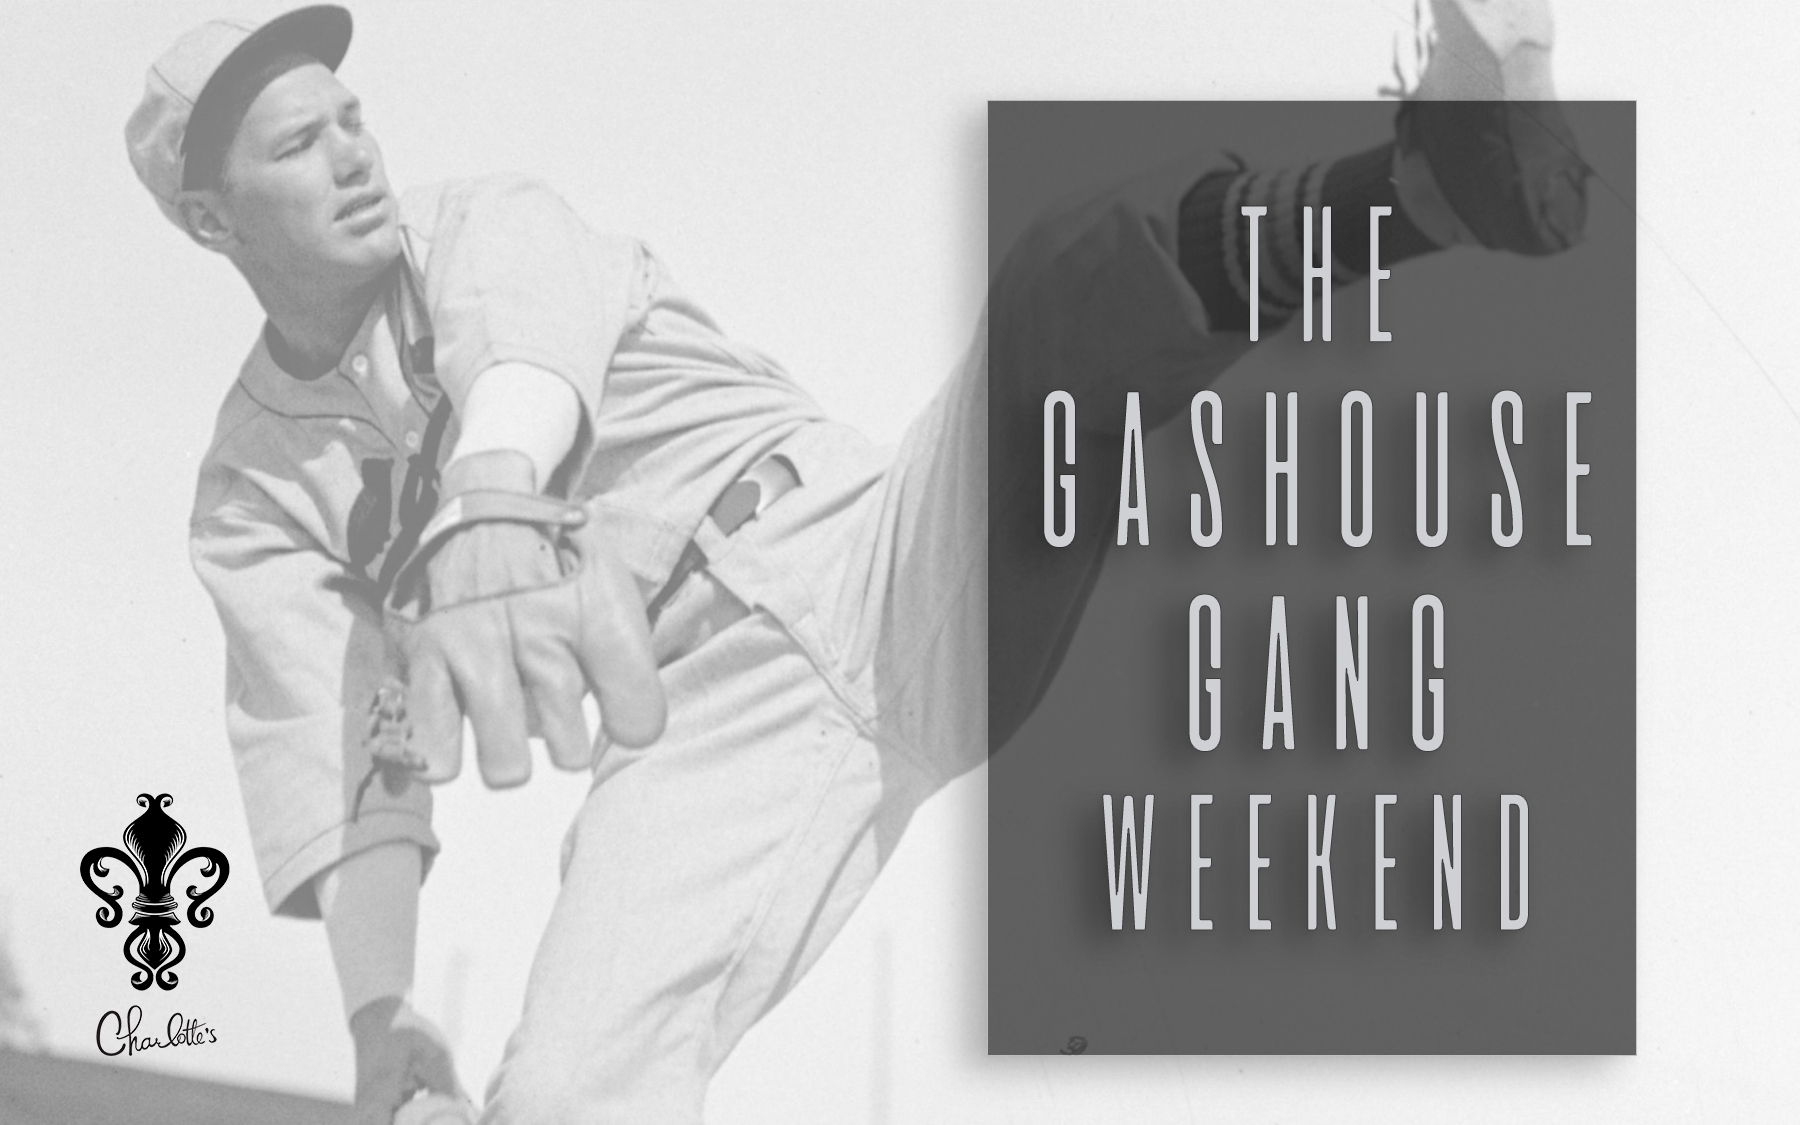 The Gashouse Gang Weekend